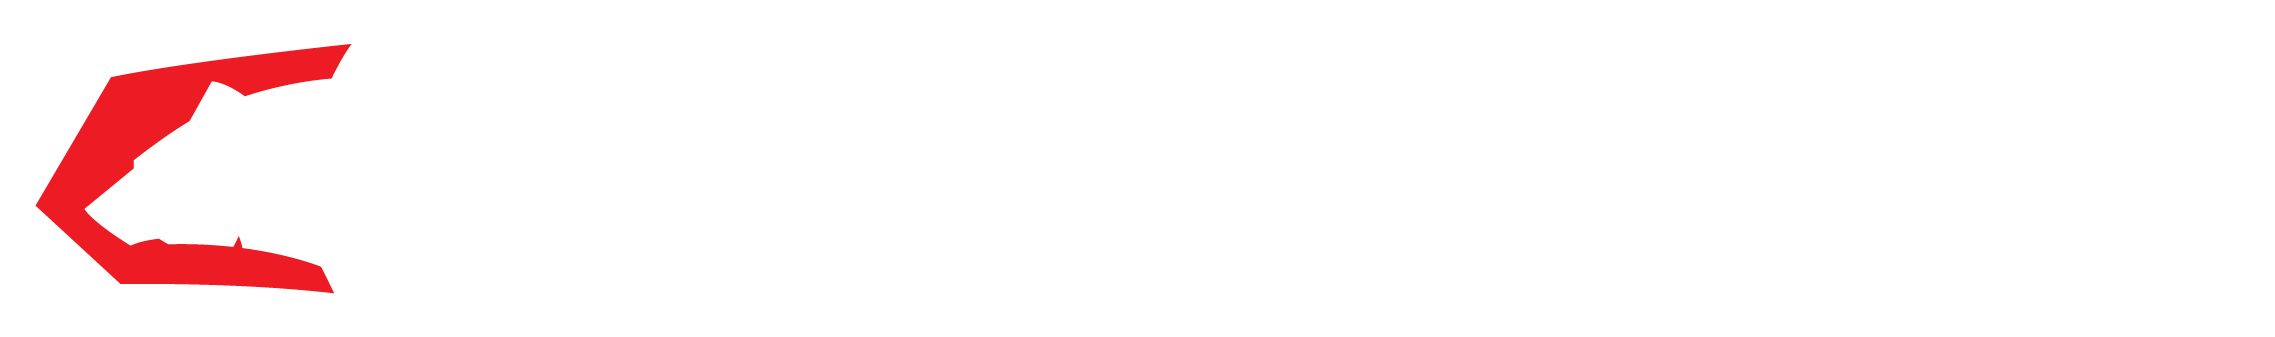 fxpredator header logo